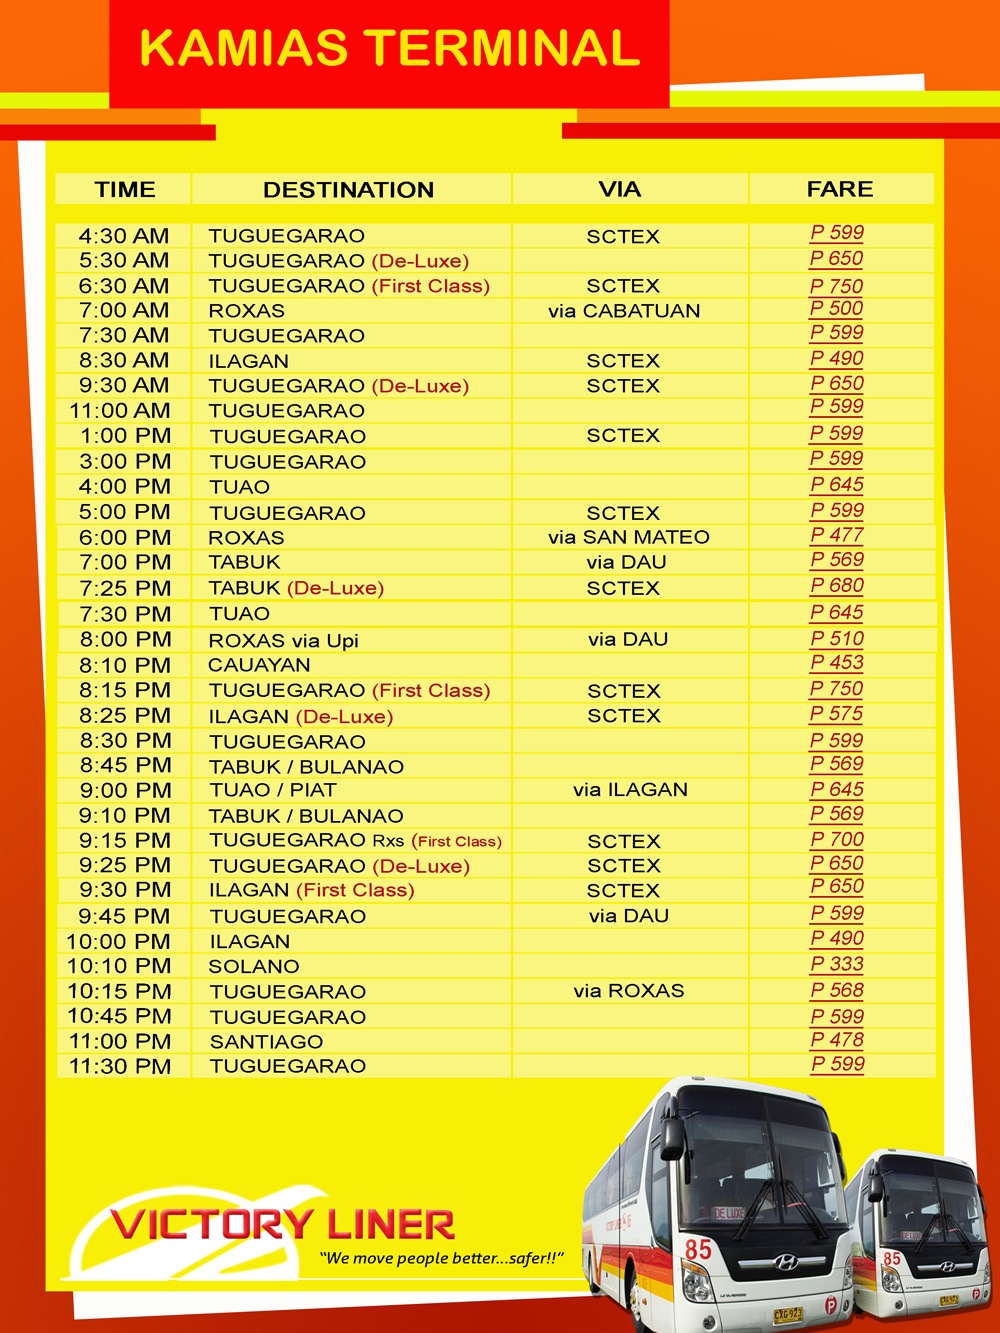 baguio trip schedule